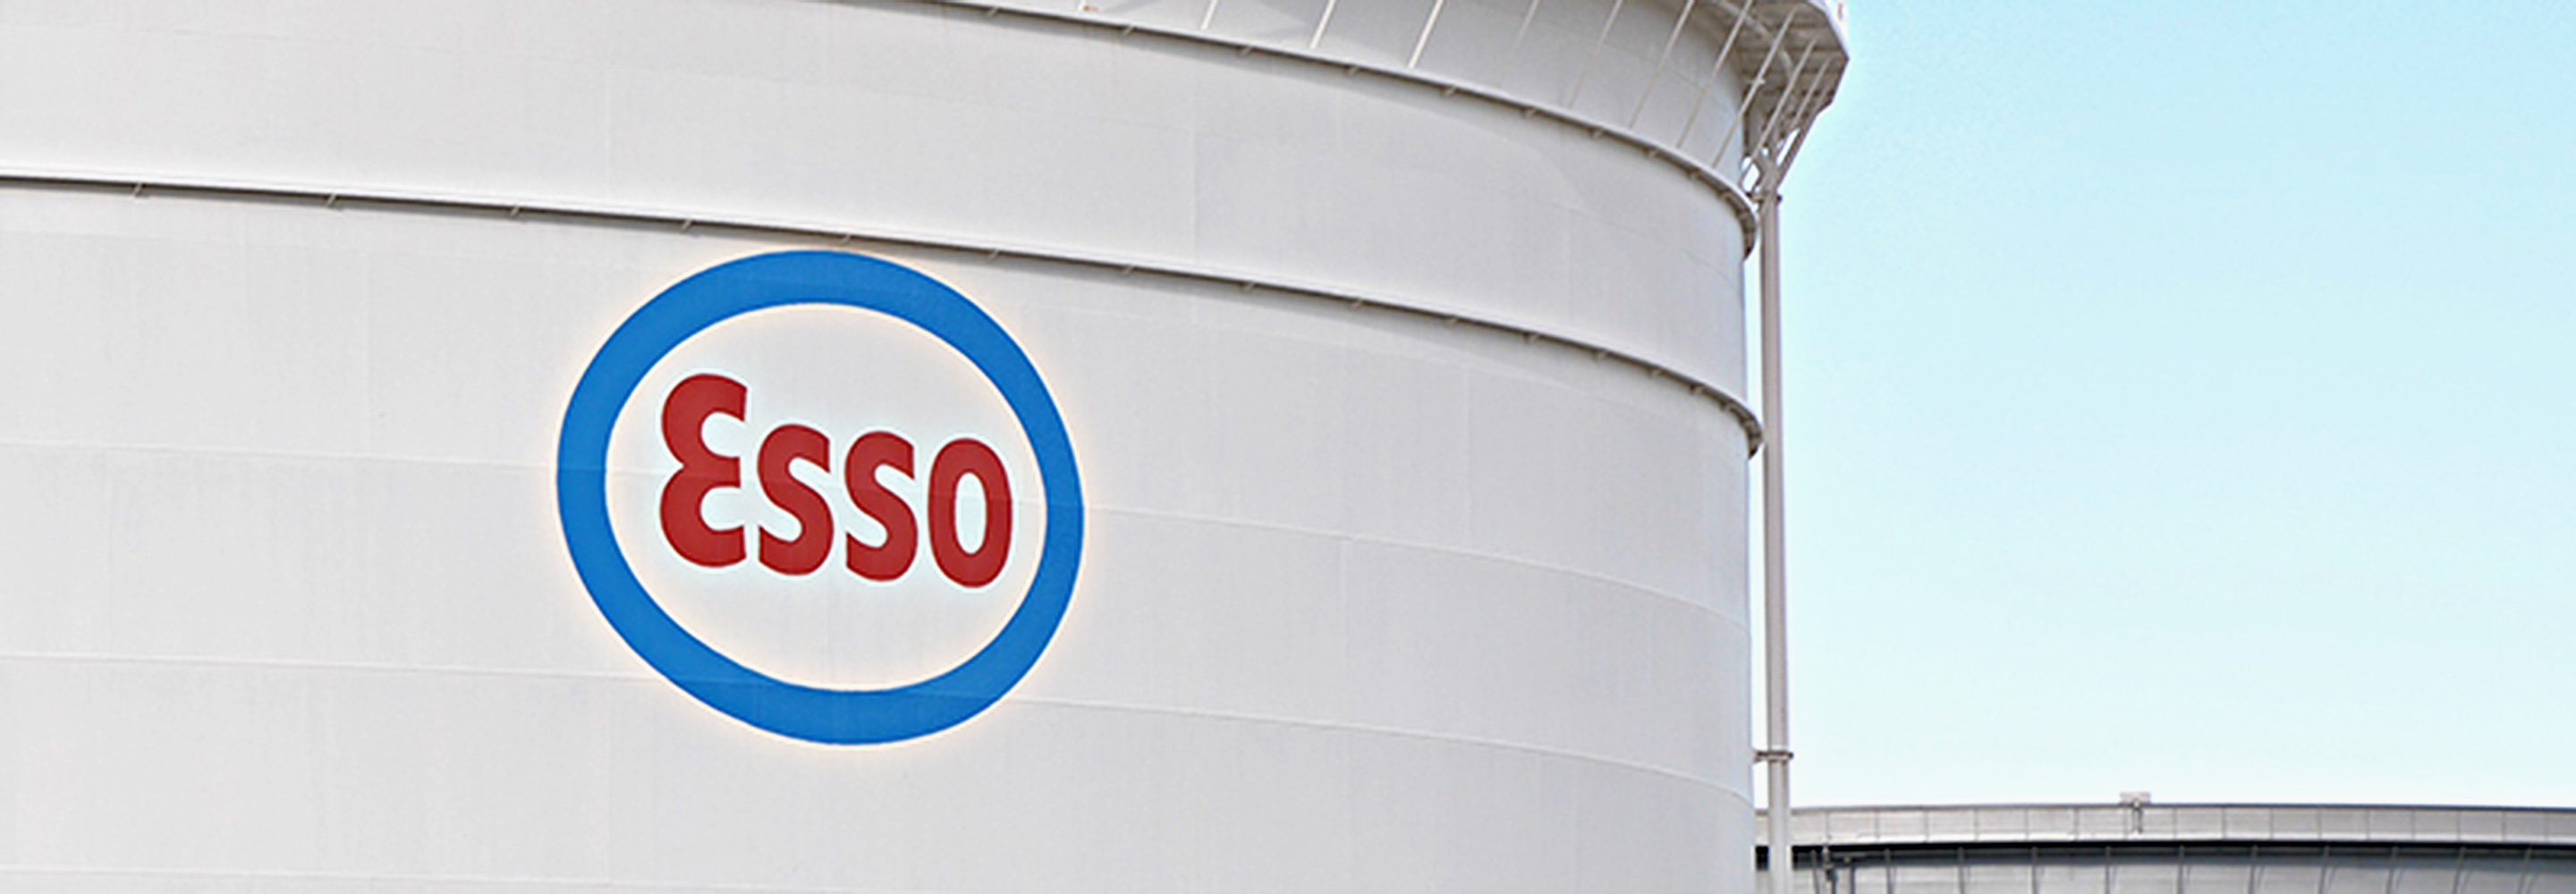 Oil tank with Esso logo at Gravenchon